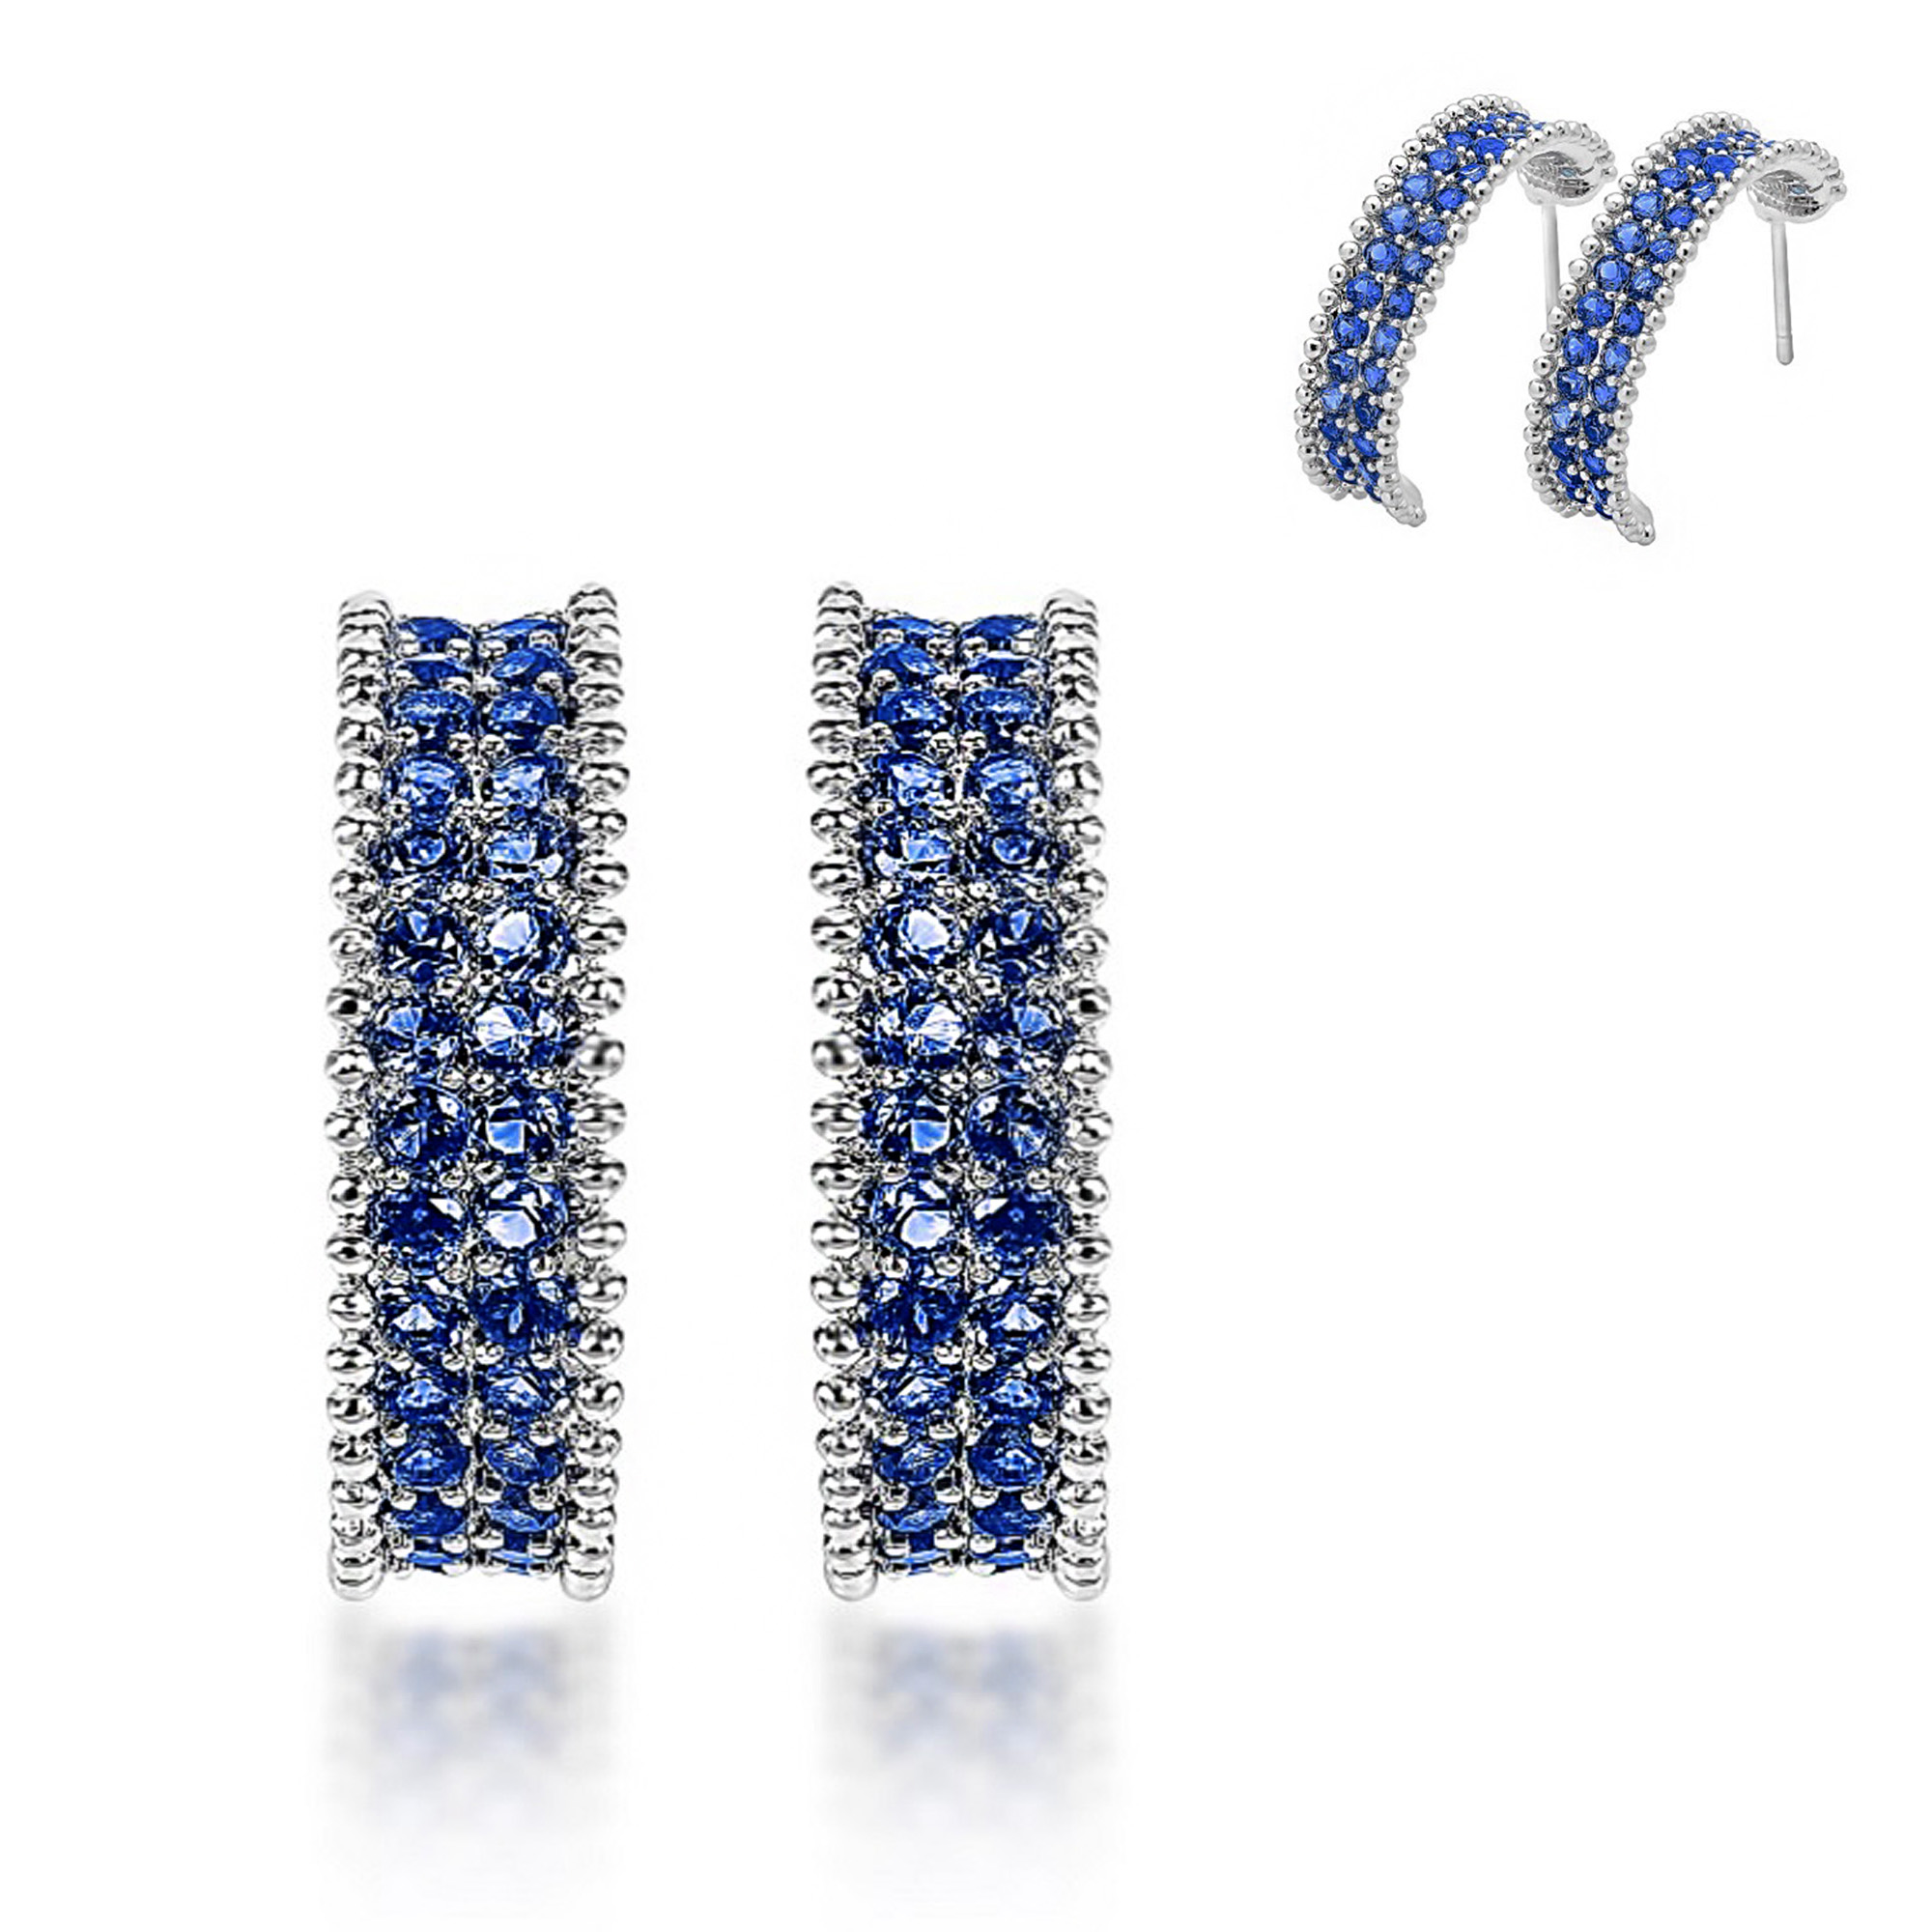 10 x HIGH-QUALITY Stunning Blue AAA Cubic Zirconia Stud Earrings ​Plus 10pc free pouches l UK SELLER l GCJ017